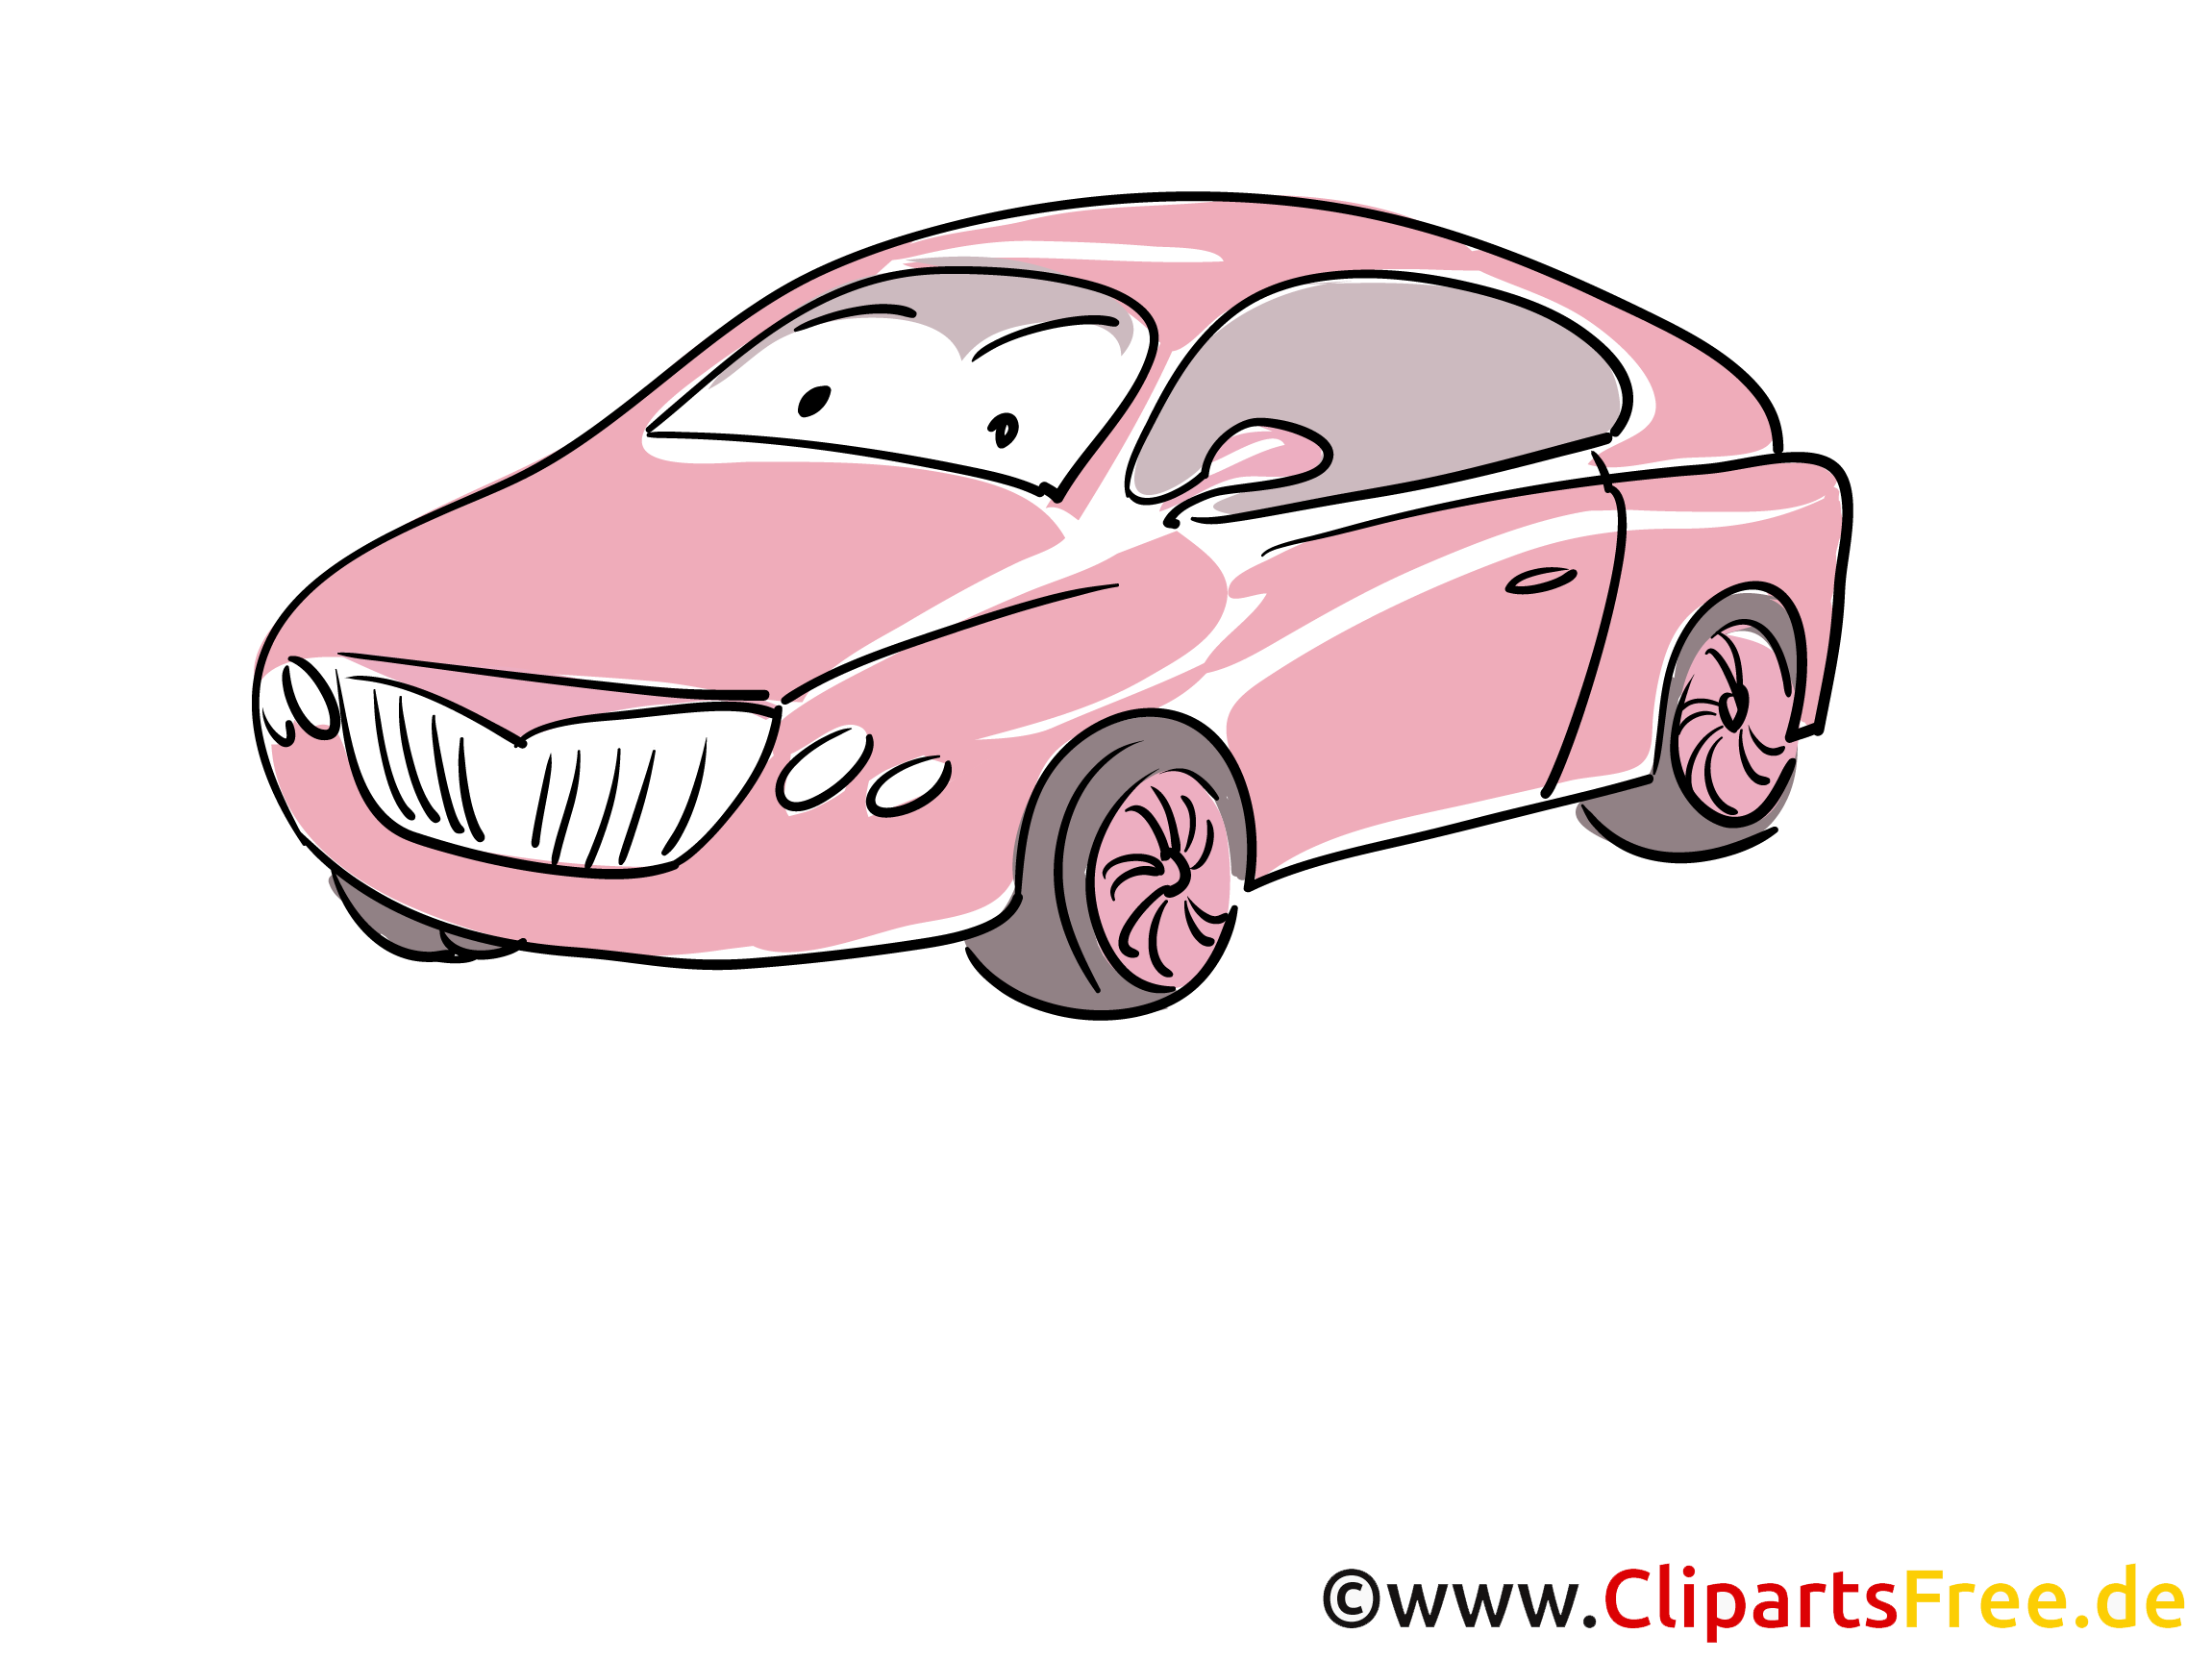 Clipart Auto kostenlos. 